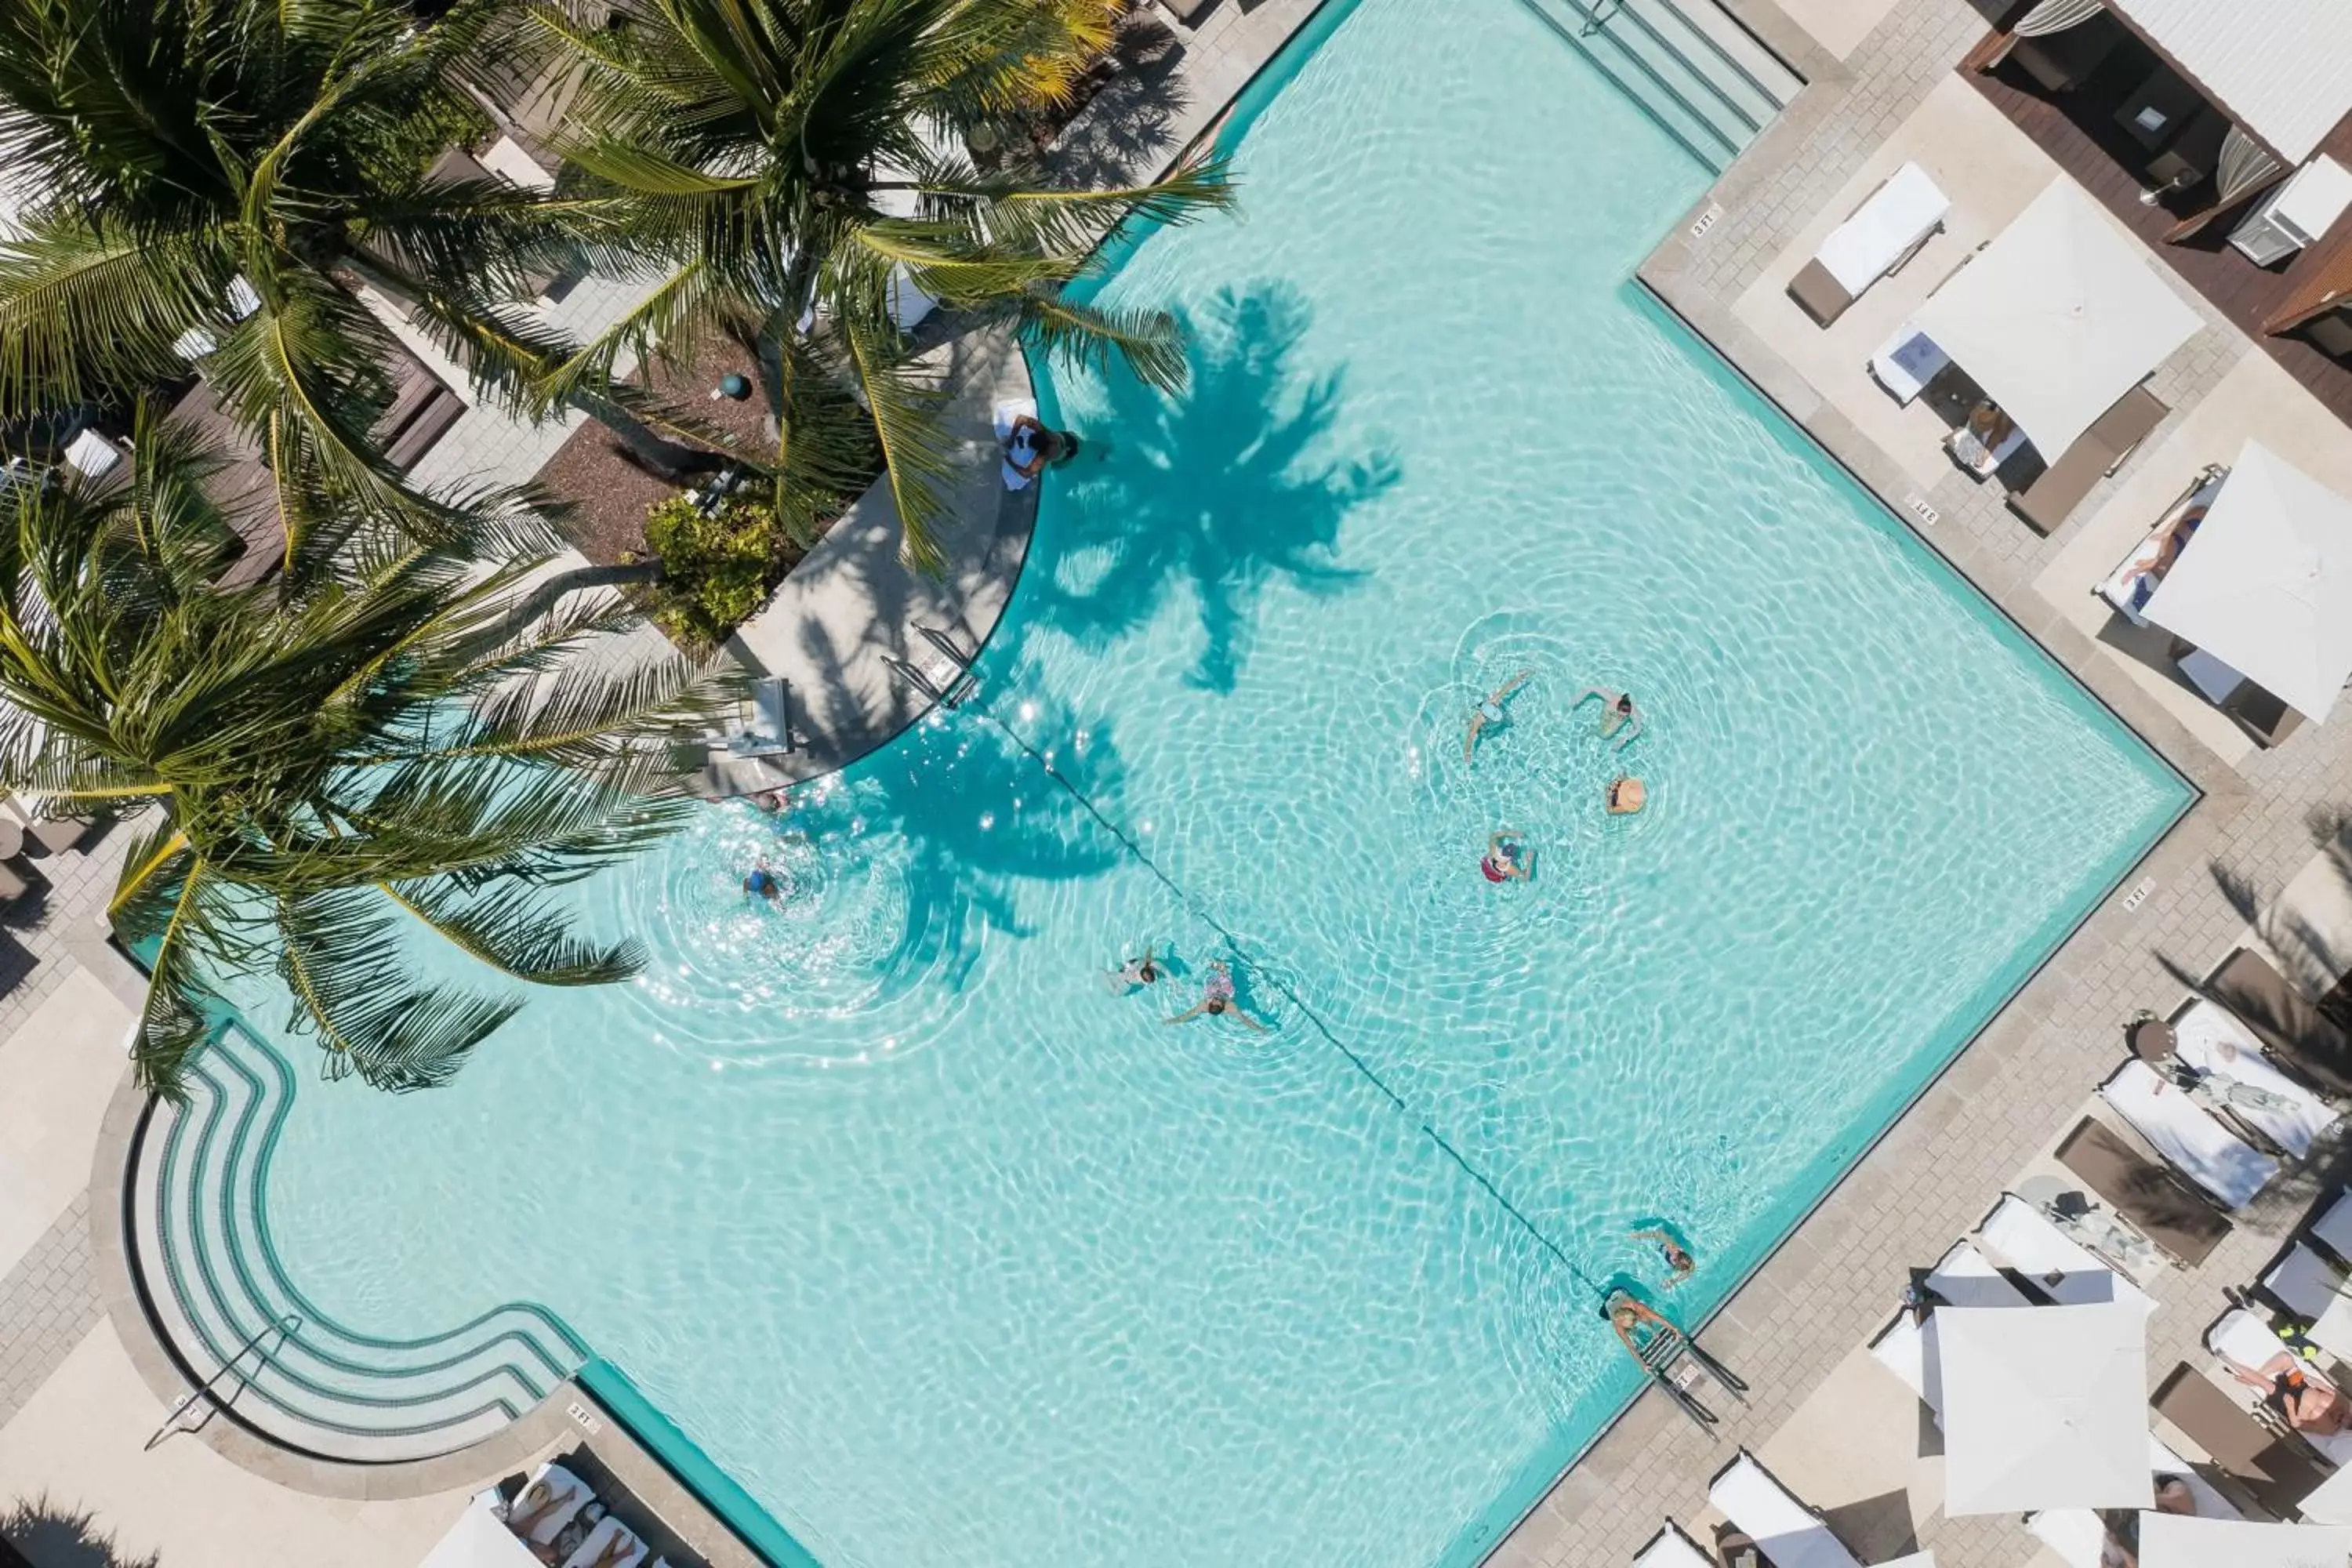 Swimming pool, Pool View in The Ritz Carlton Key Biscayne, Miami